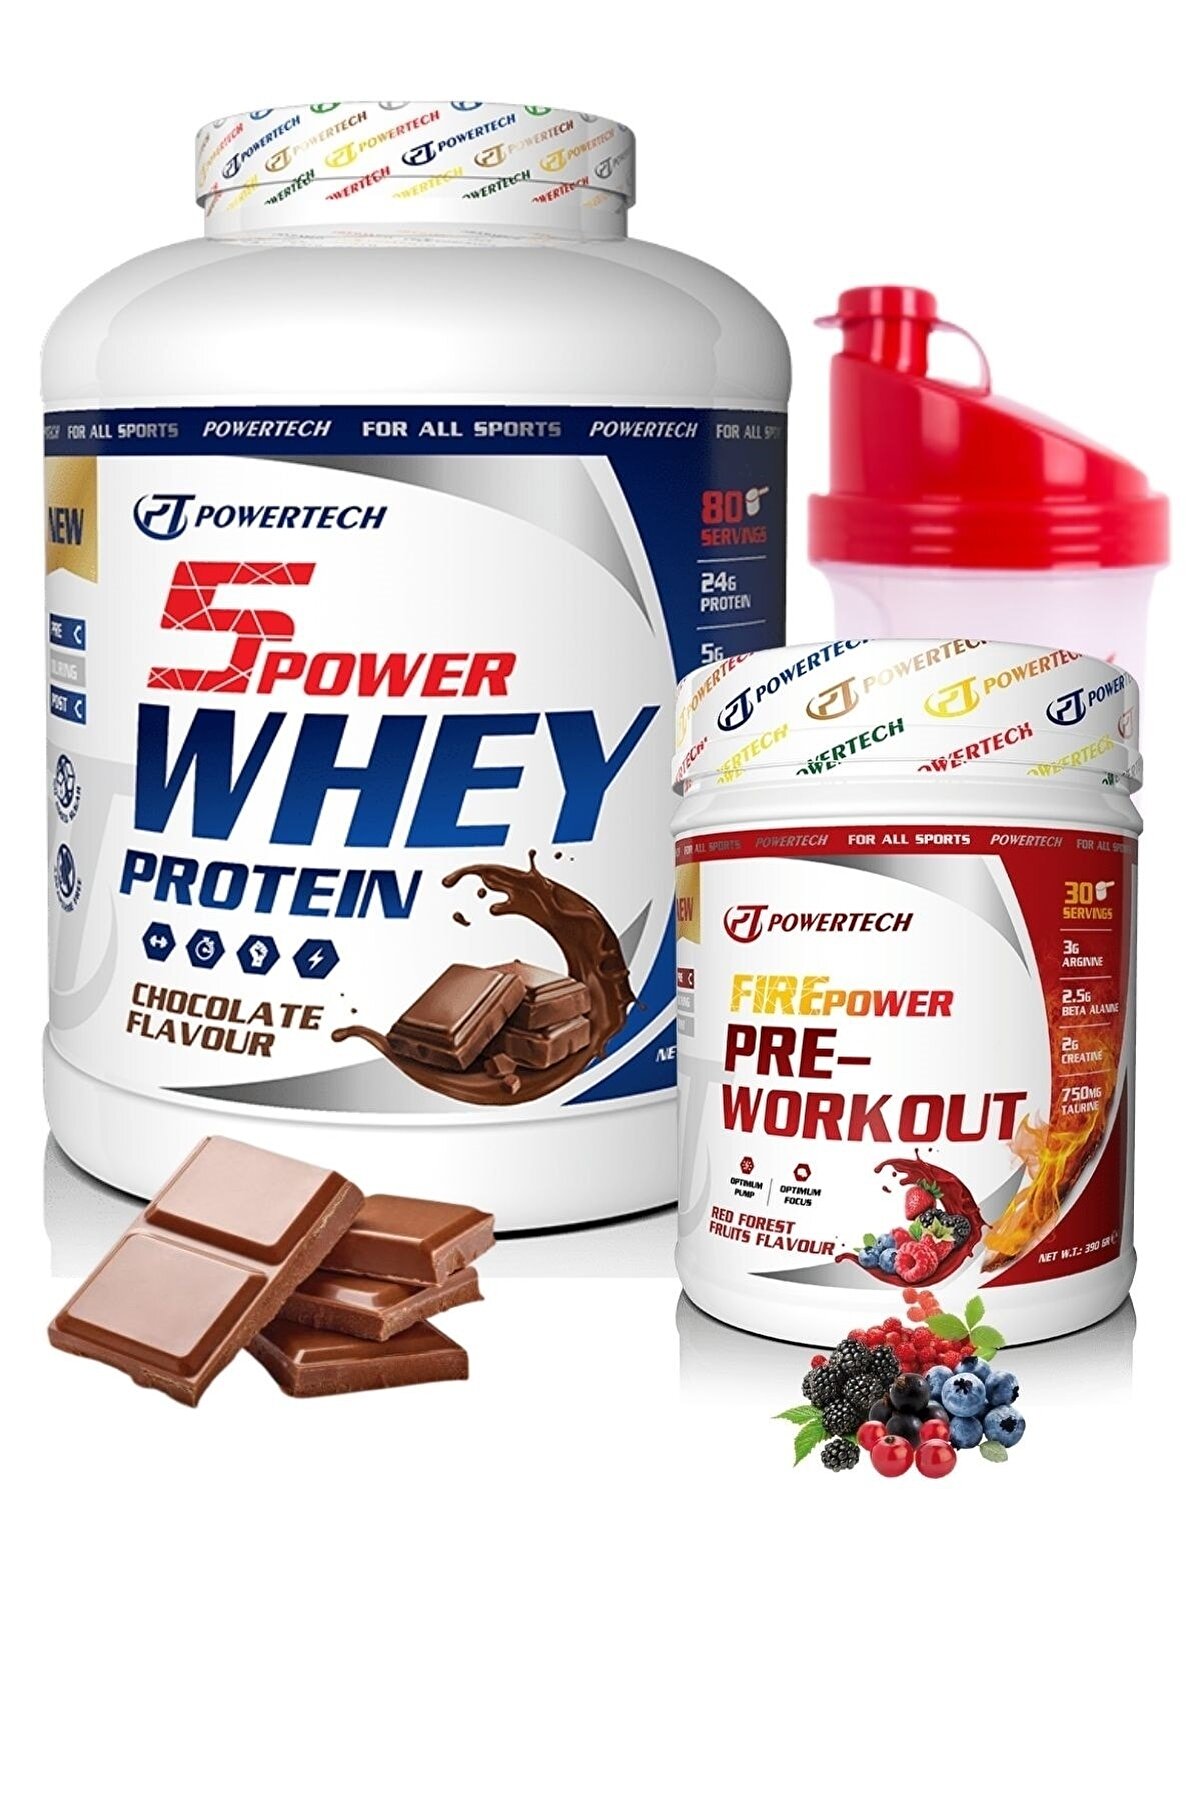 POWERTECH 5power Whey Protein Tozu 80 Servis Çikolata - Firepower Pre-workout 390 Gr